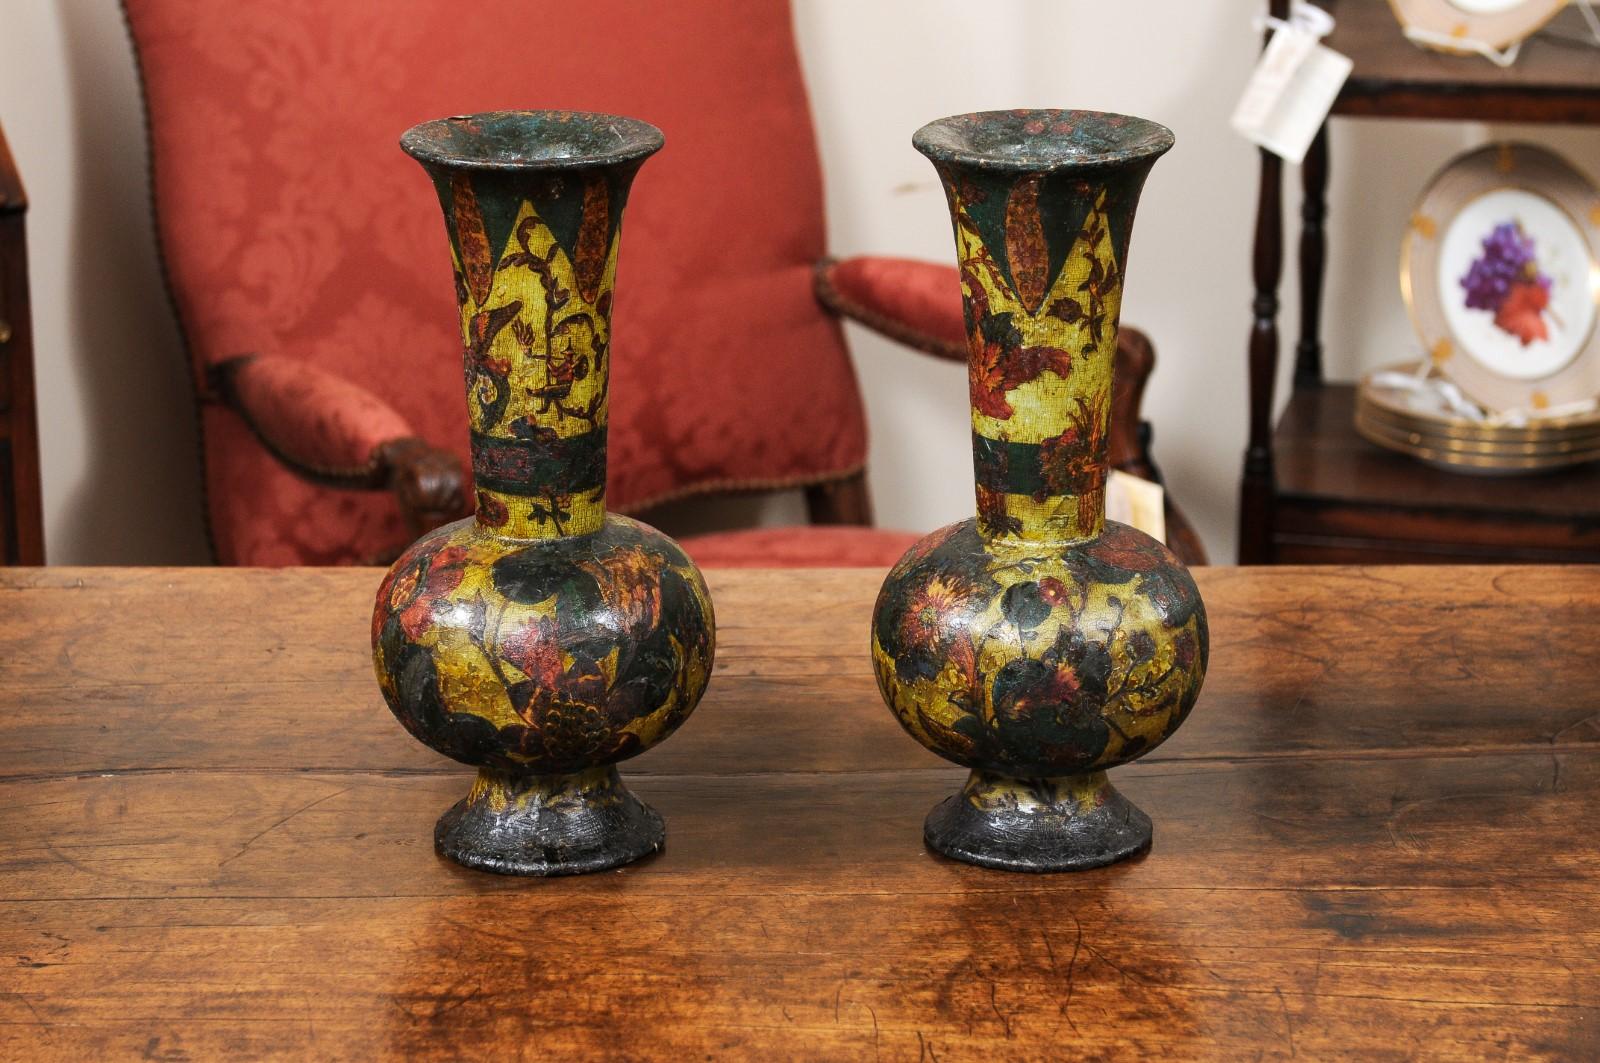  Pair of Italian Decoupage Wood Vases, 19th Century For Sale 5